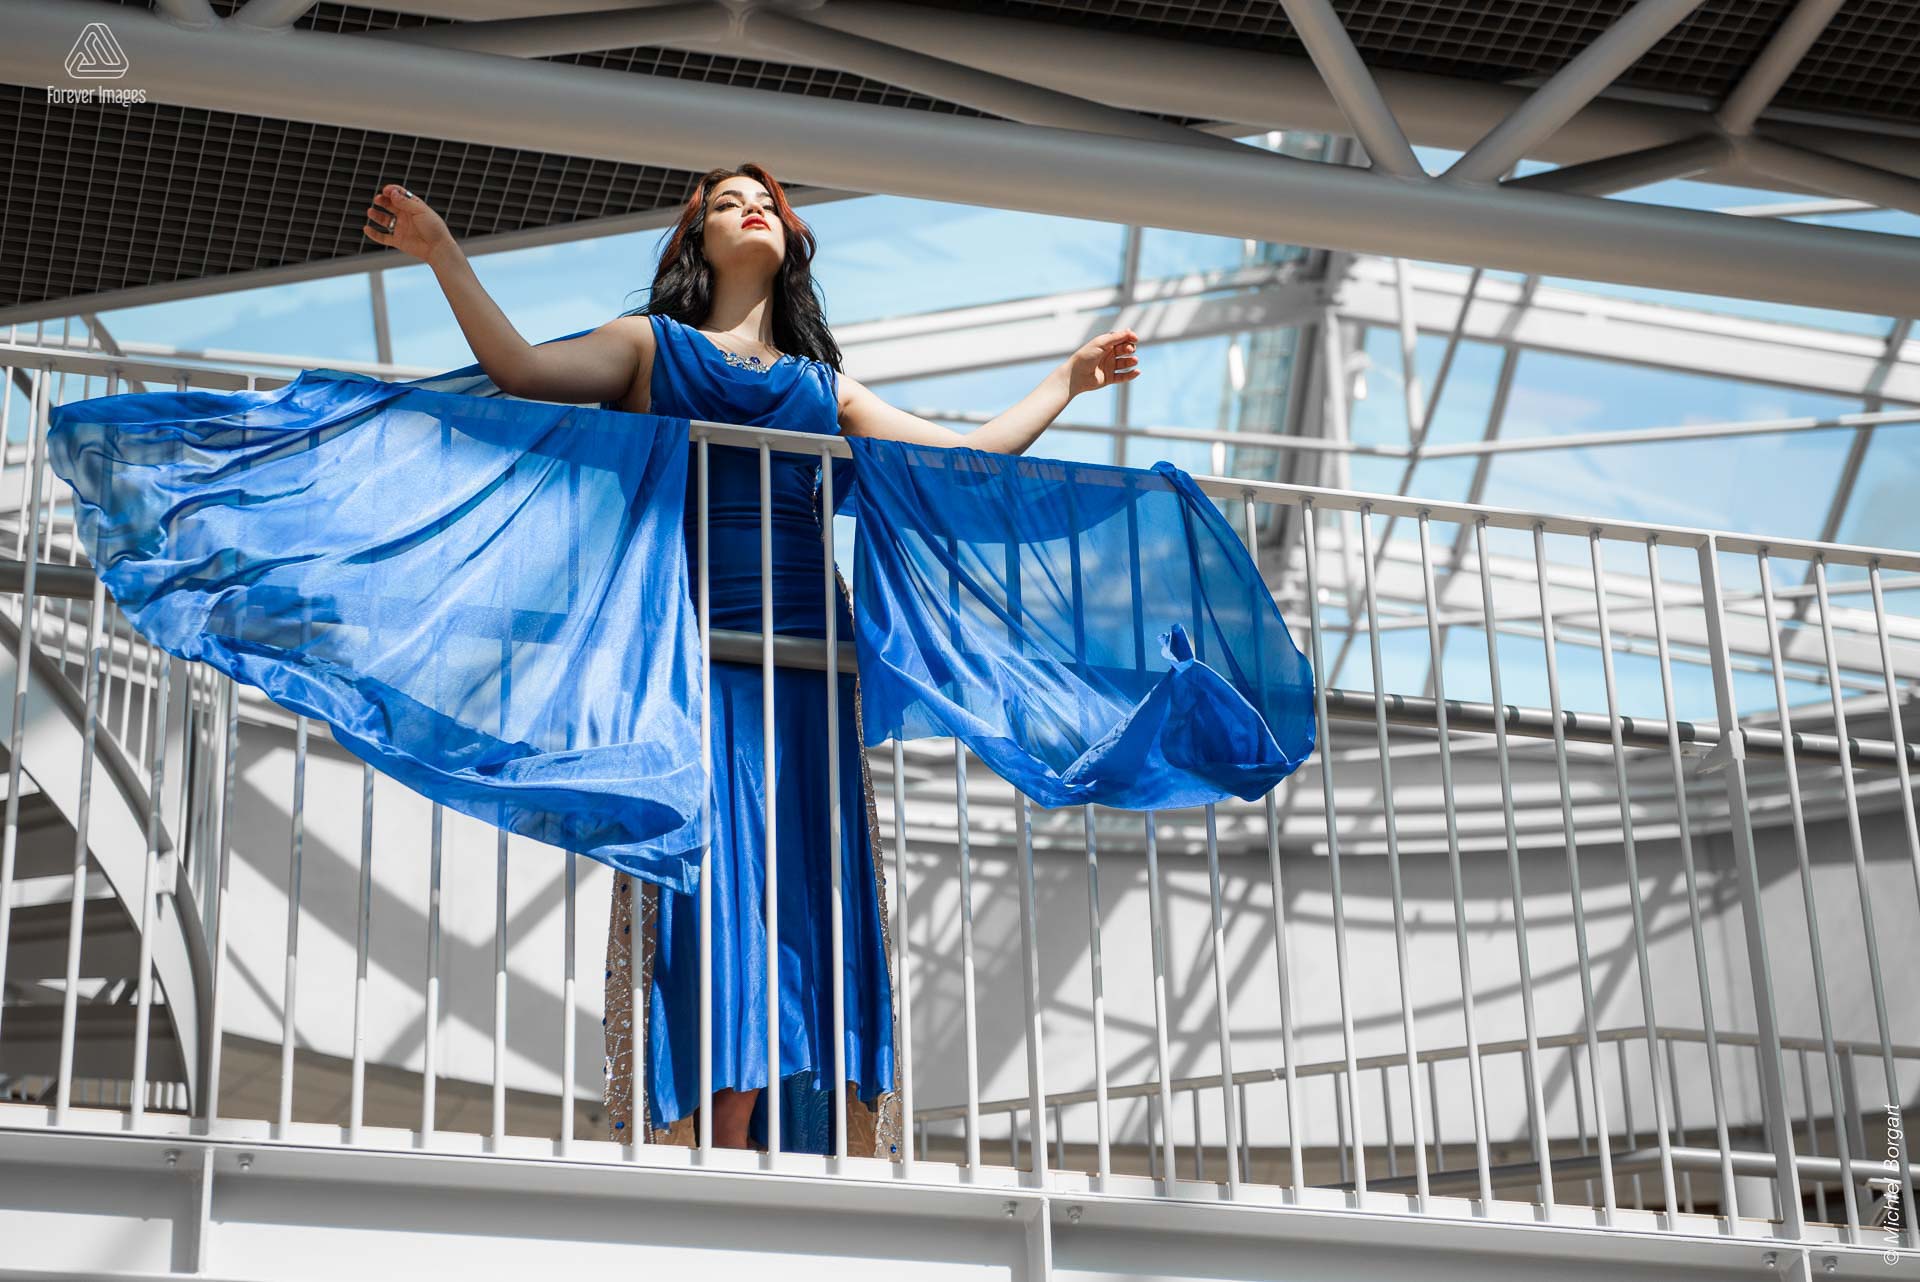 Fashion photo glamor beautiful lady blue dress hanging over railing | Daphna Akkermans David Cardenas | Fashion Photographer Michiel Borgart - Forever Images.